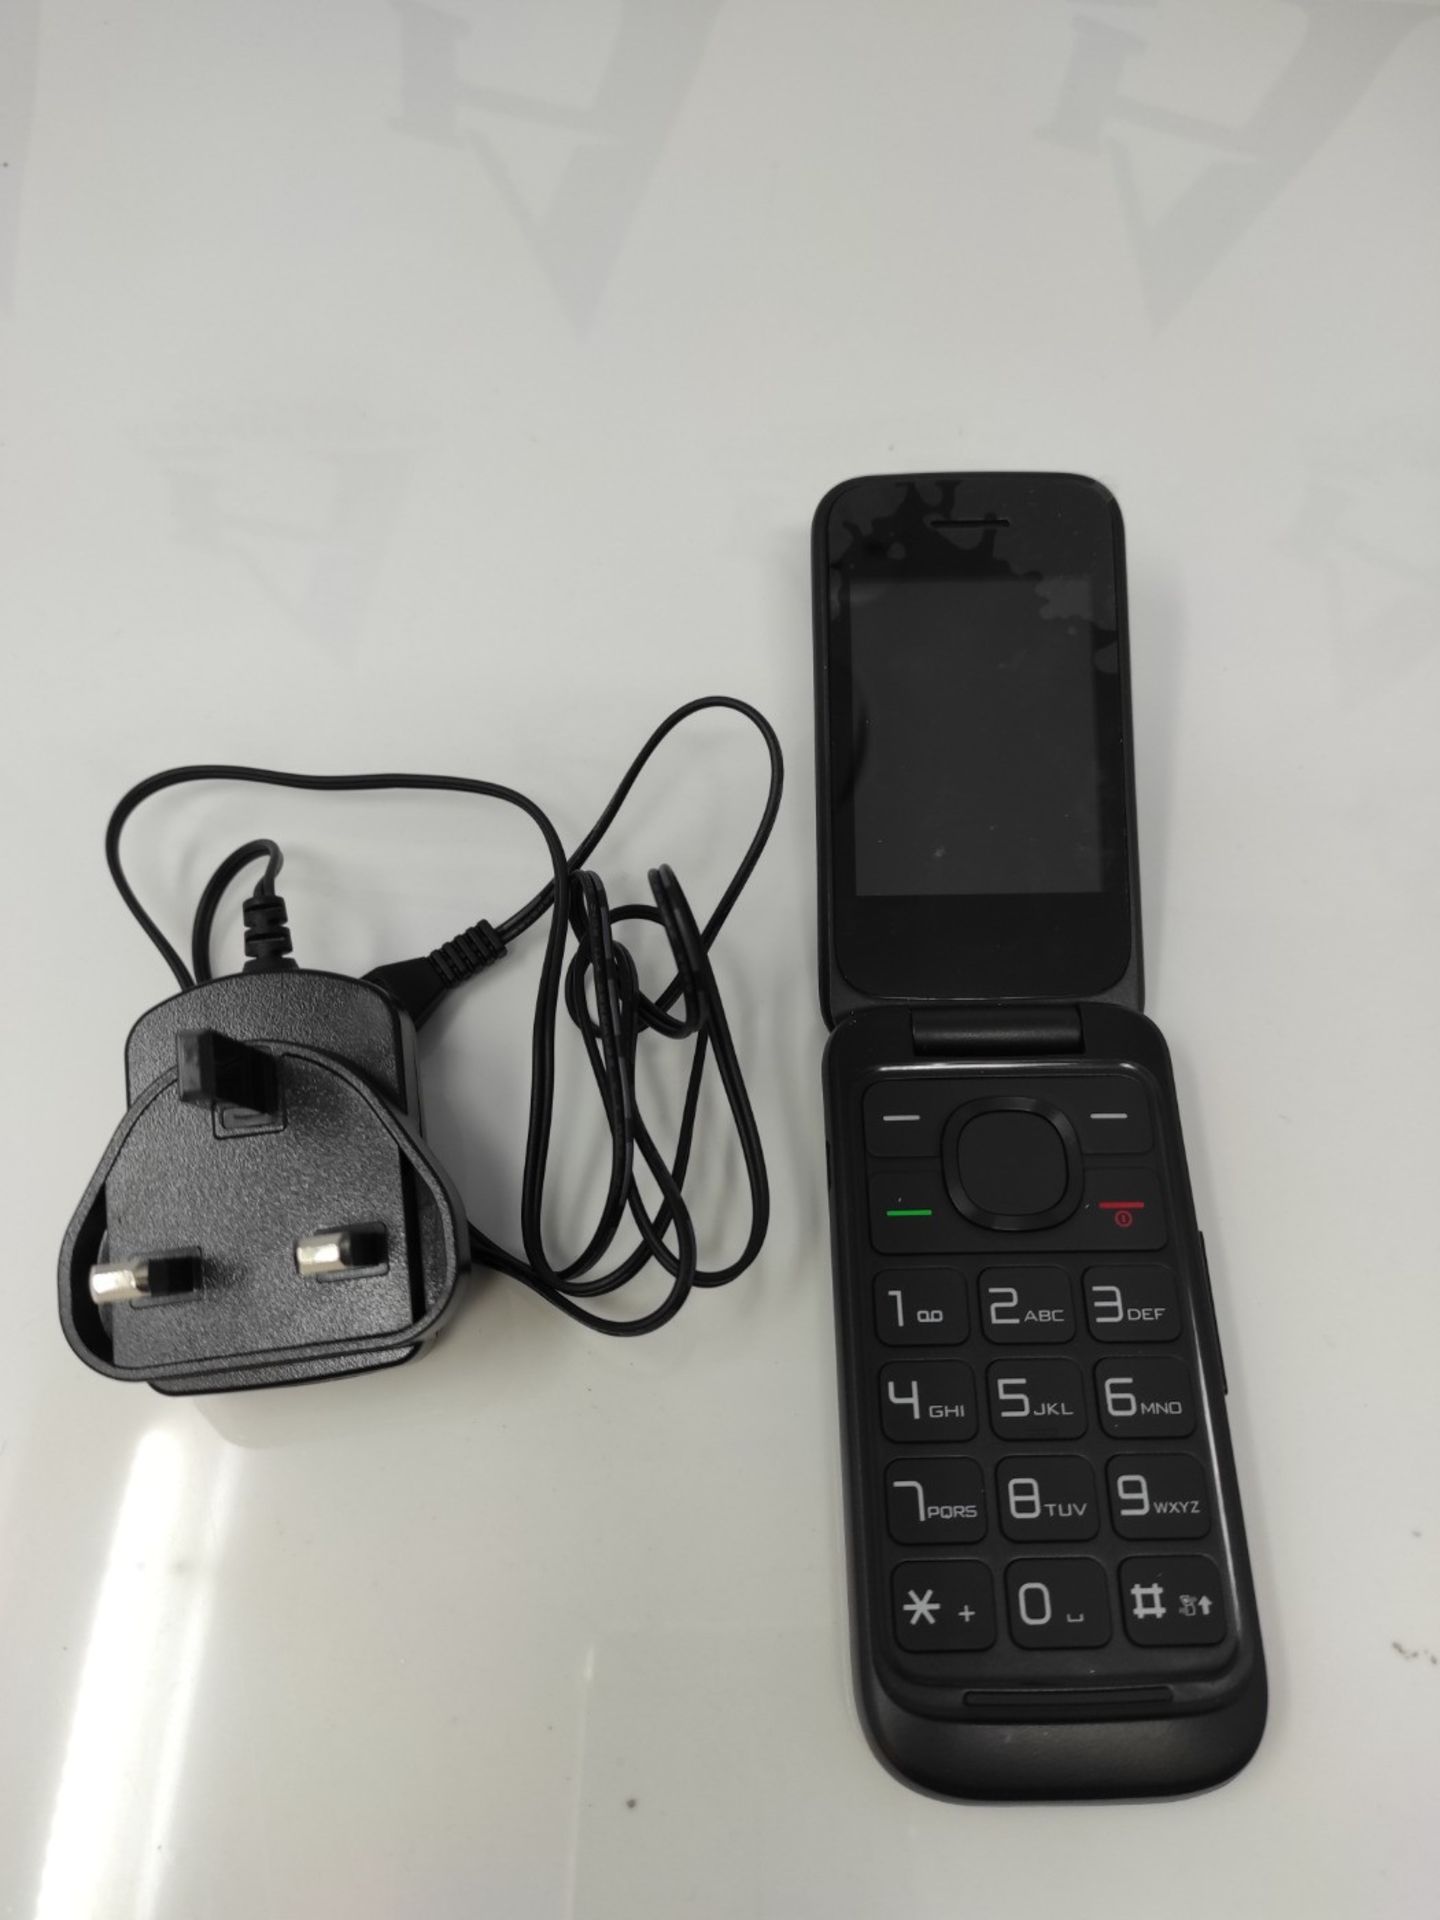 Alcatel 20.57 UK Sim Free Feature Phone,Black - Image 3 of 3